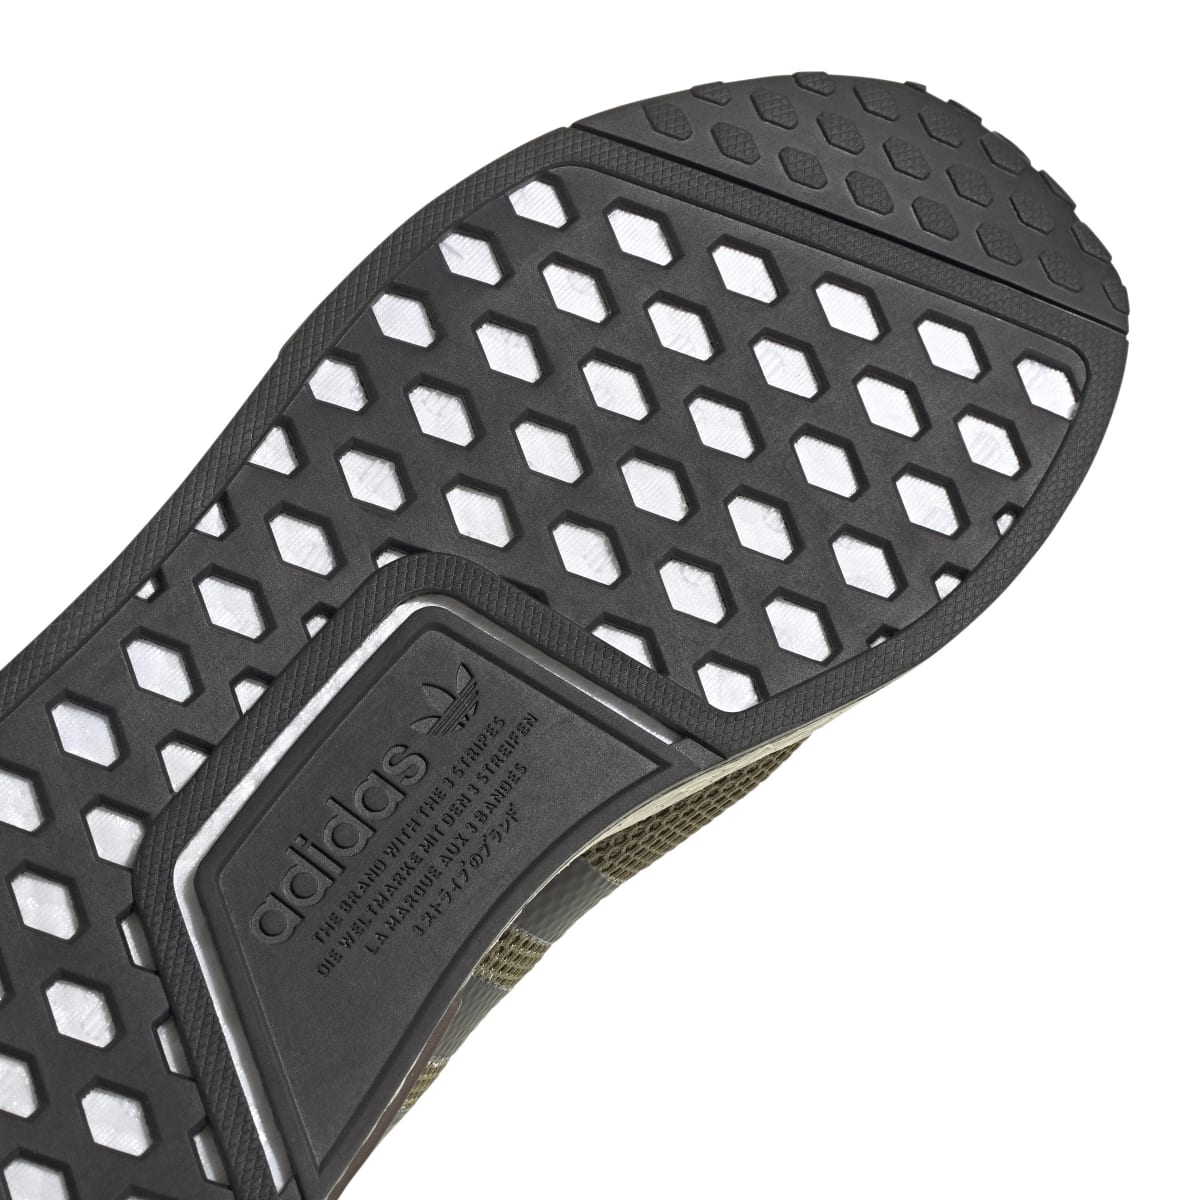 ADIDAS IG5534 NMD_R1 MN'S (Medium) Olive/Black/Olive Mesh Running Shoes